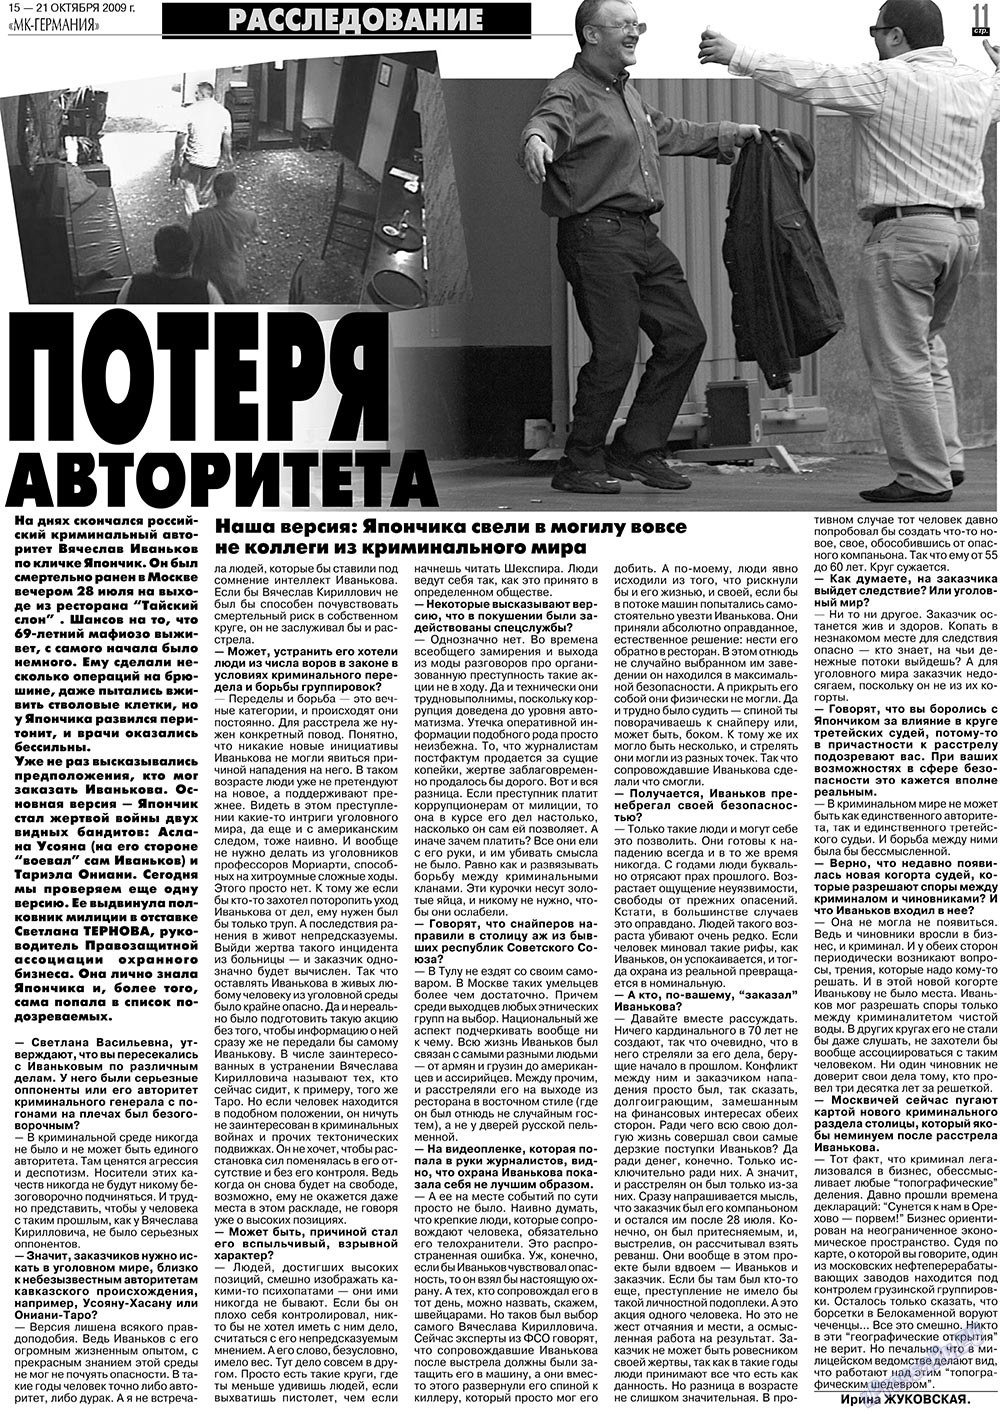 МК-Германия, газета. 2009 №42 стр.11